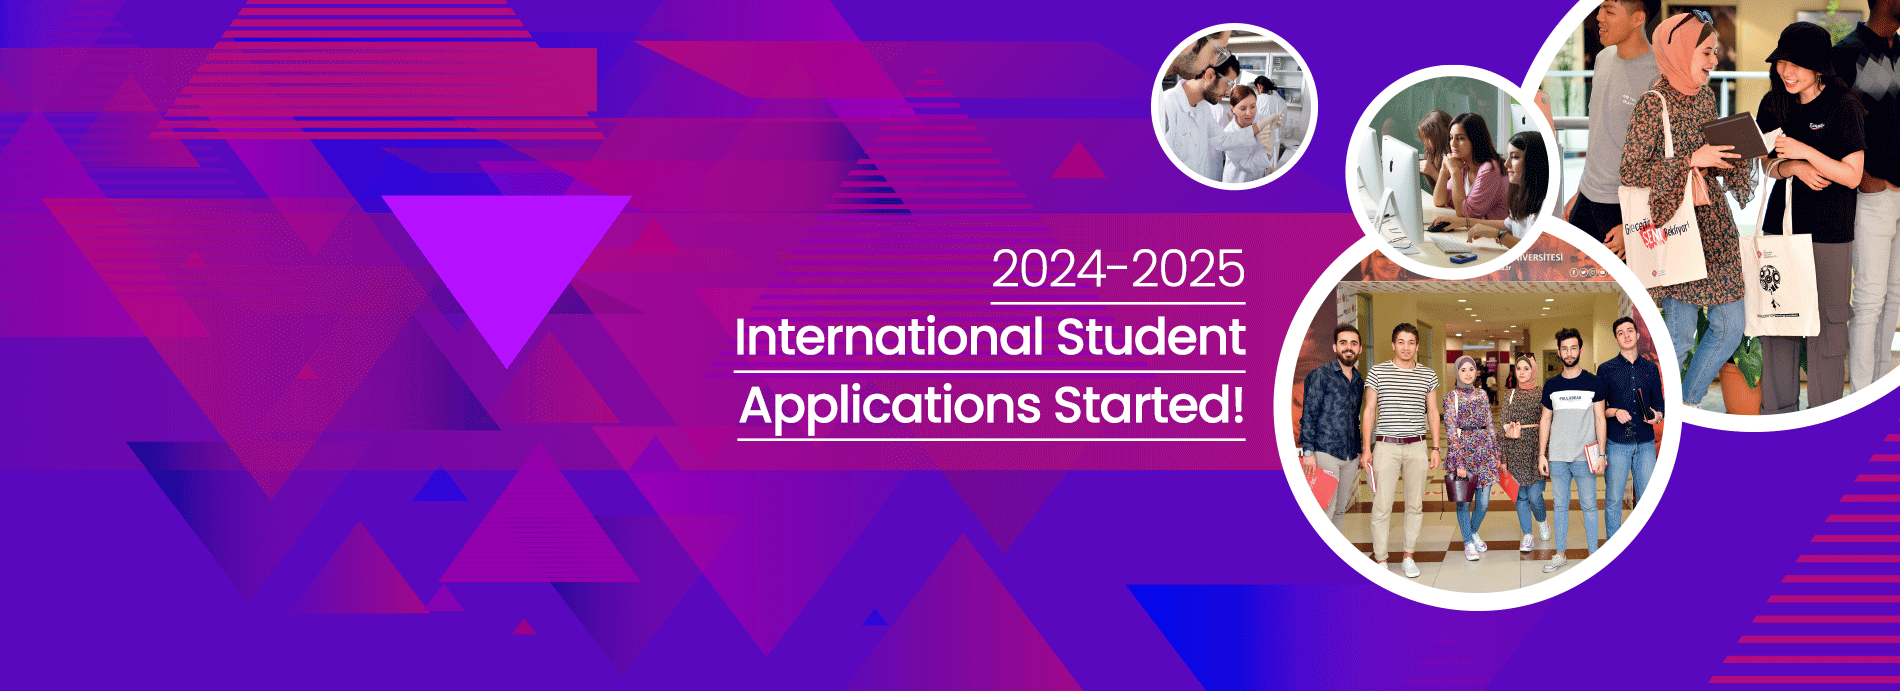 International Students Applications